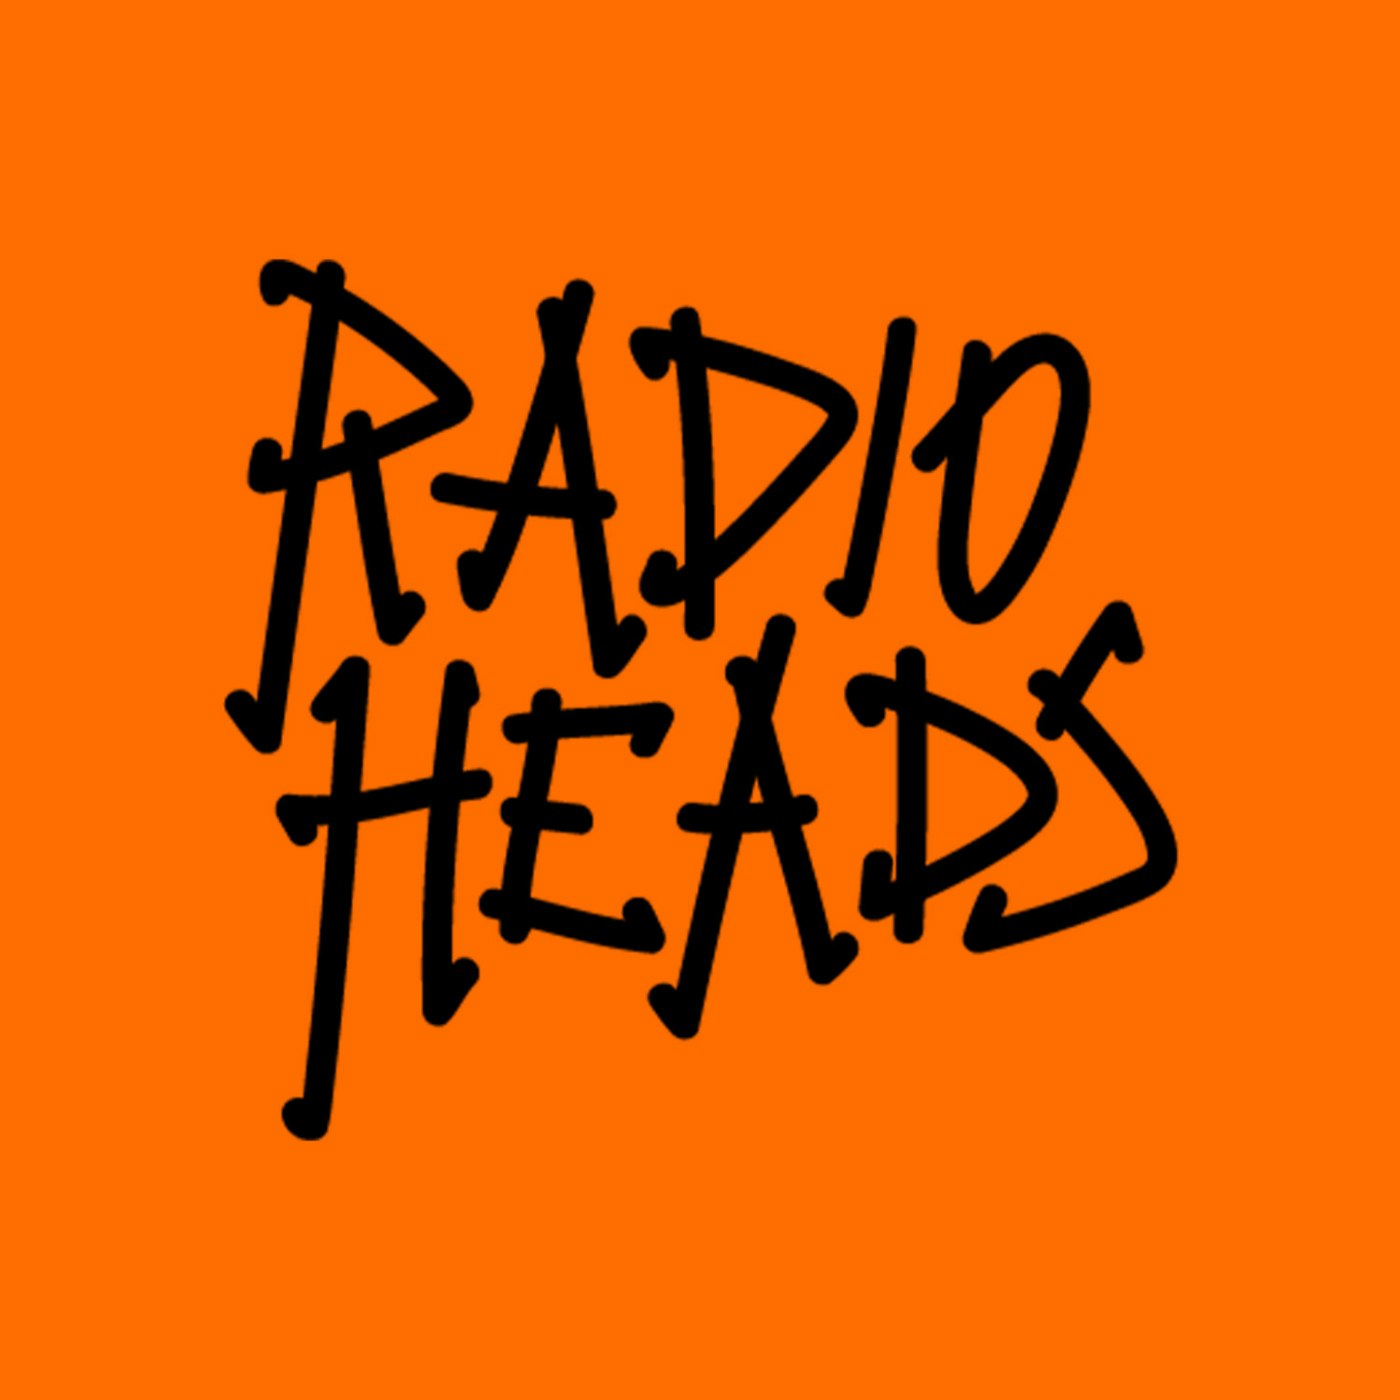 RADIO HEADS